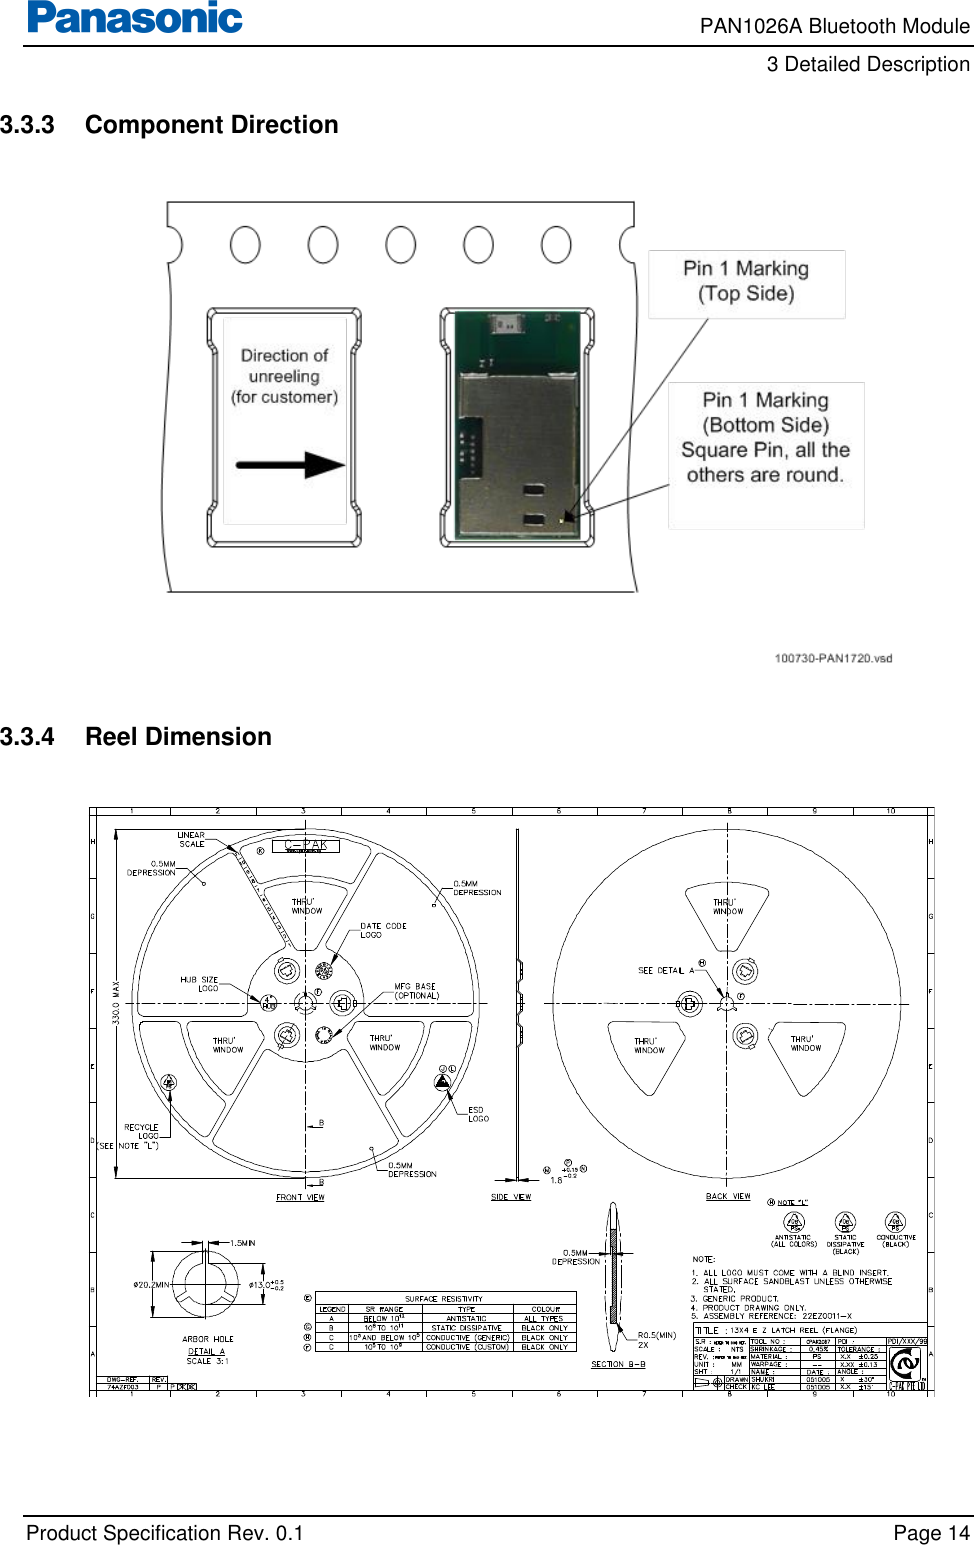     PAN1026A Bluetooth Module         3 Detailed Description    Product Specification Rev. 0.1    Page 14  3.3.3  Component Direction    3.3.4  Reel Dimension     